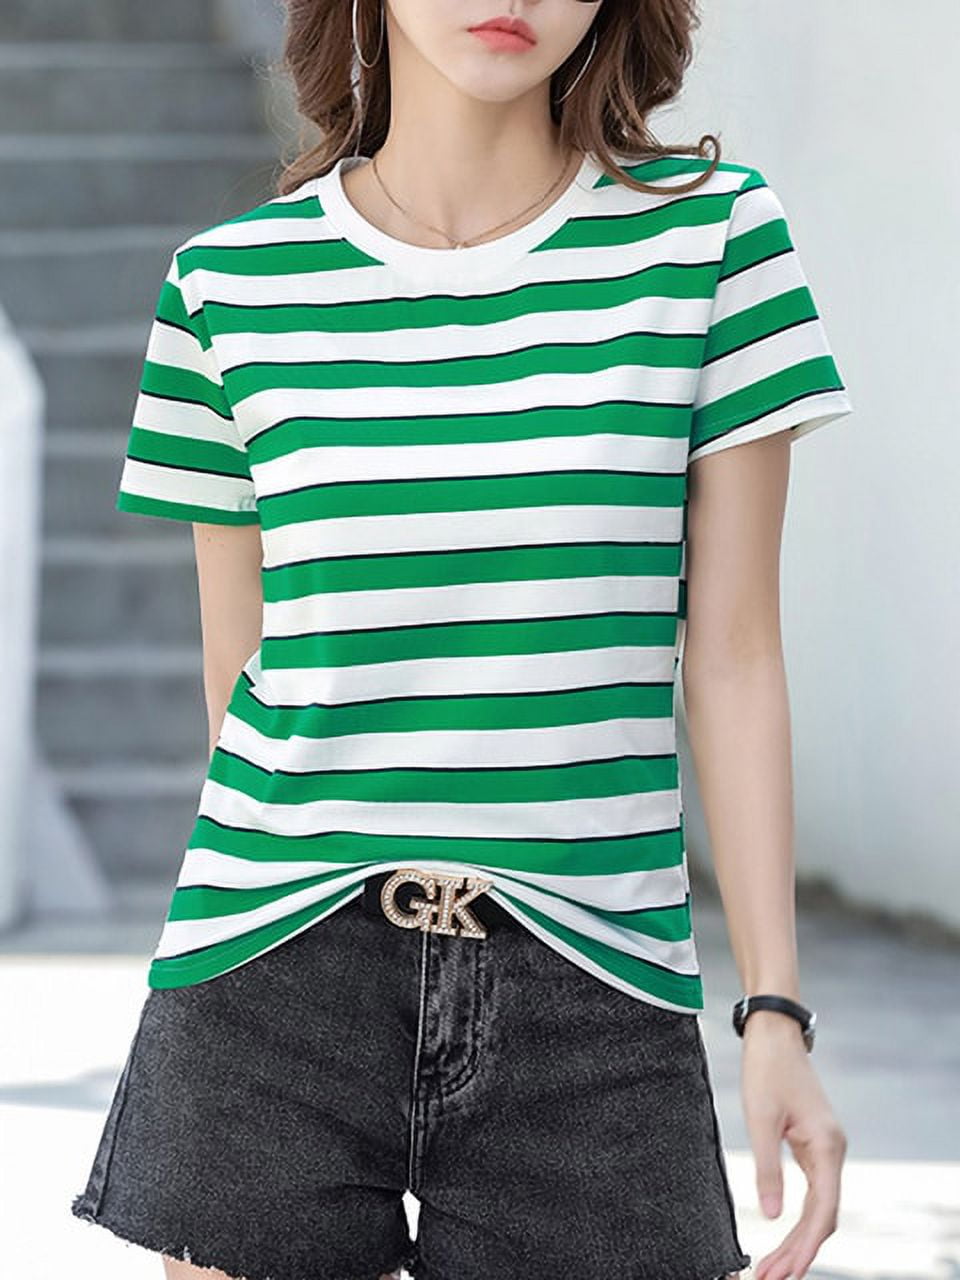 DanceeMangoo Summer Blue Green Striped T-Shirts Women O-Neck Tshirts Female  Short Sleeve Basic Fashion Cotton Tops